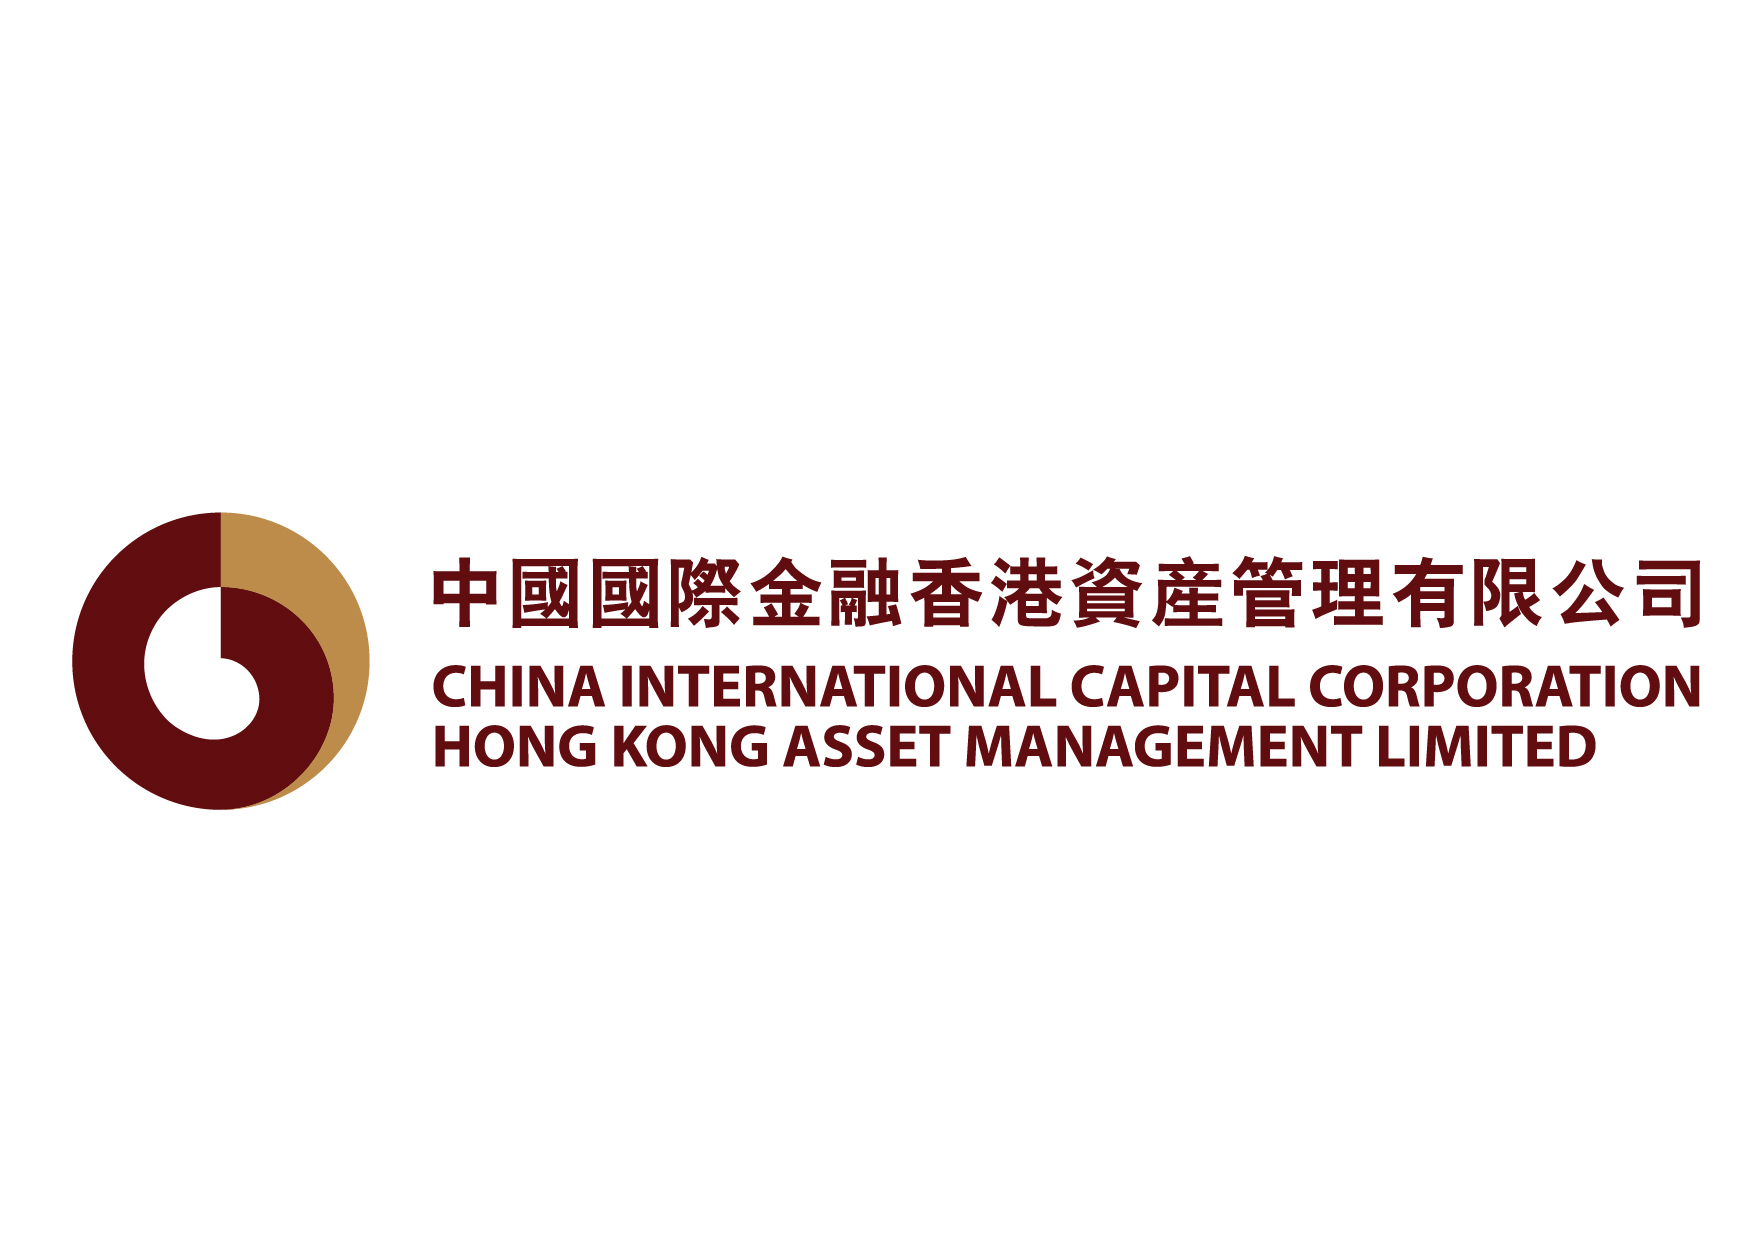 China International Capital Corporation Hong Kong Asset Management Limited